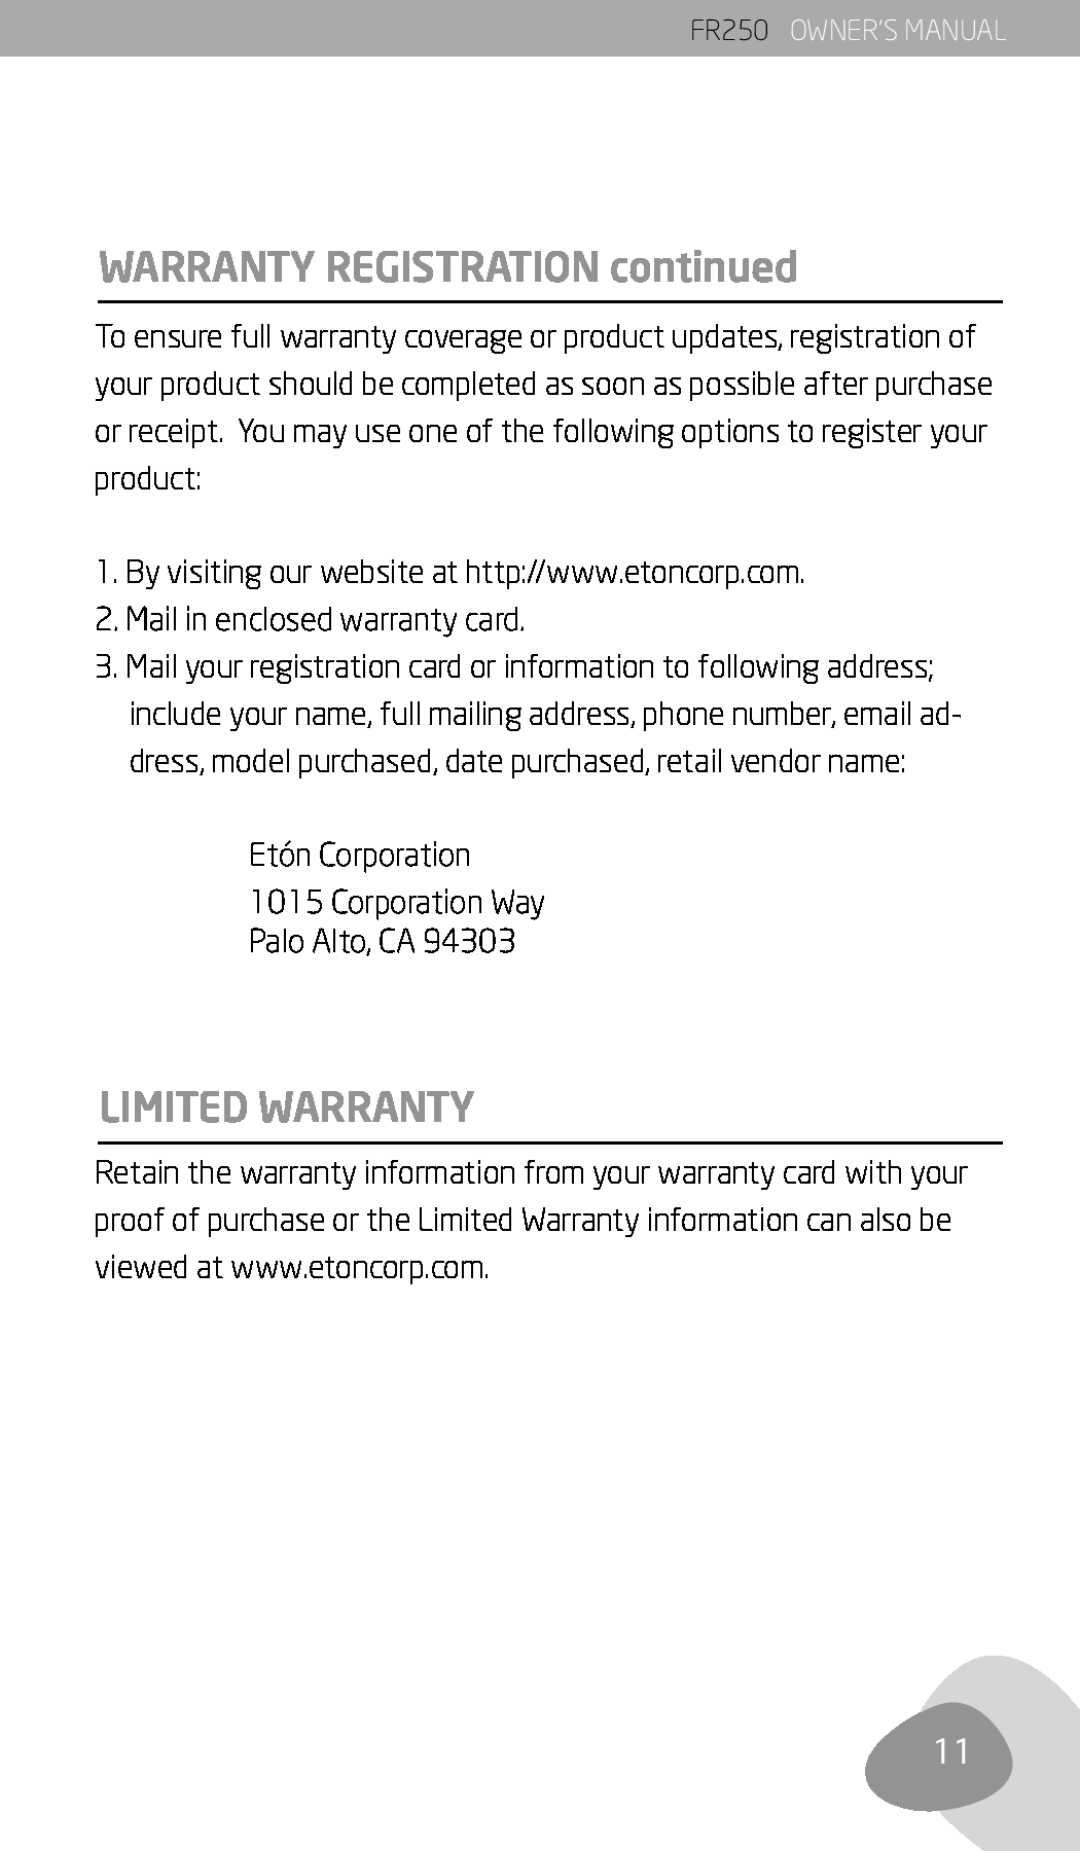 Eton FR250 owner manual WARRANTY REGISTRATION continued, Limited Warranty 